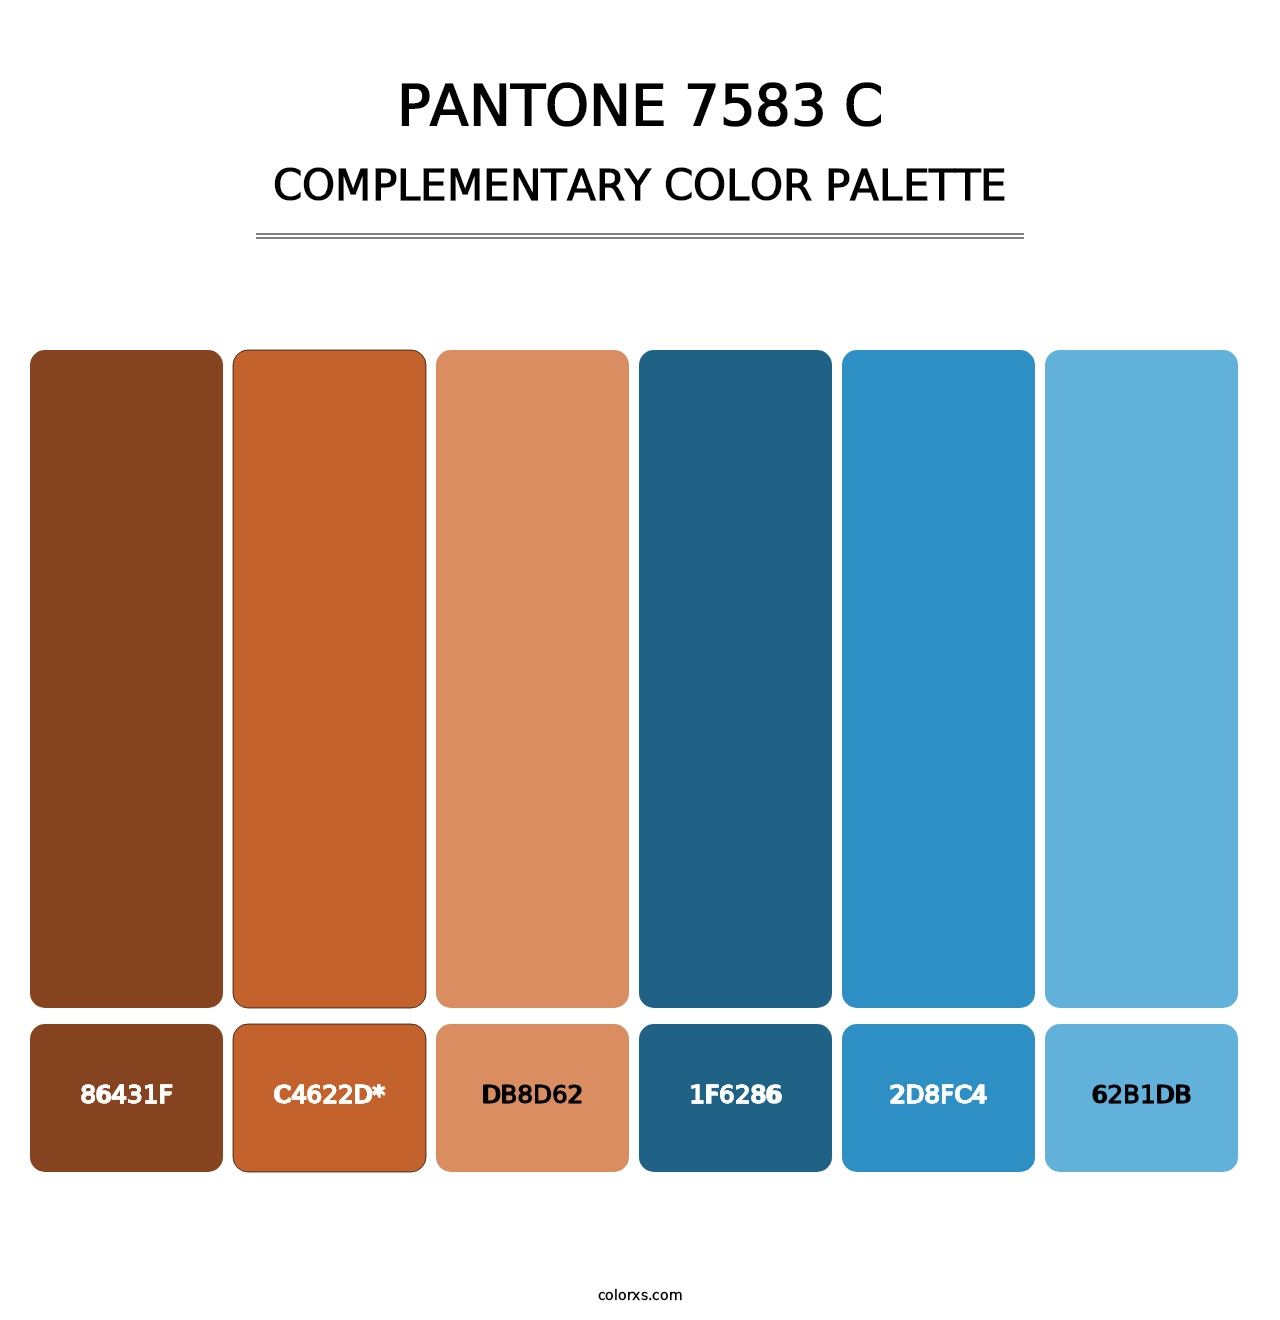 PANTONE 7583 C - Complementary Color Palette